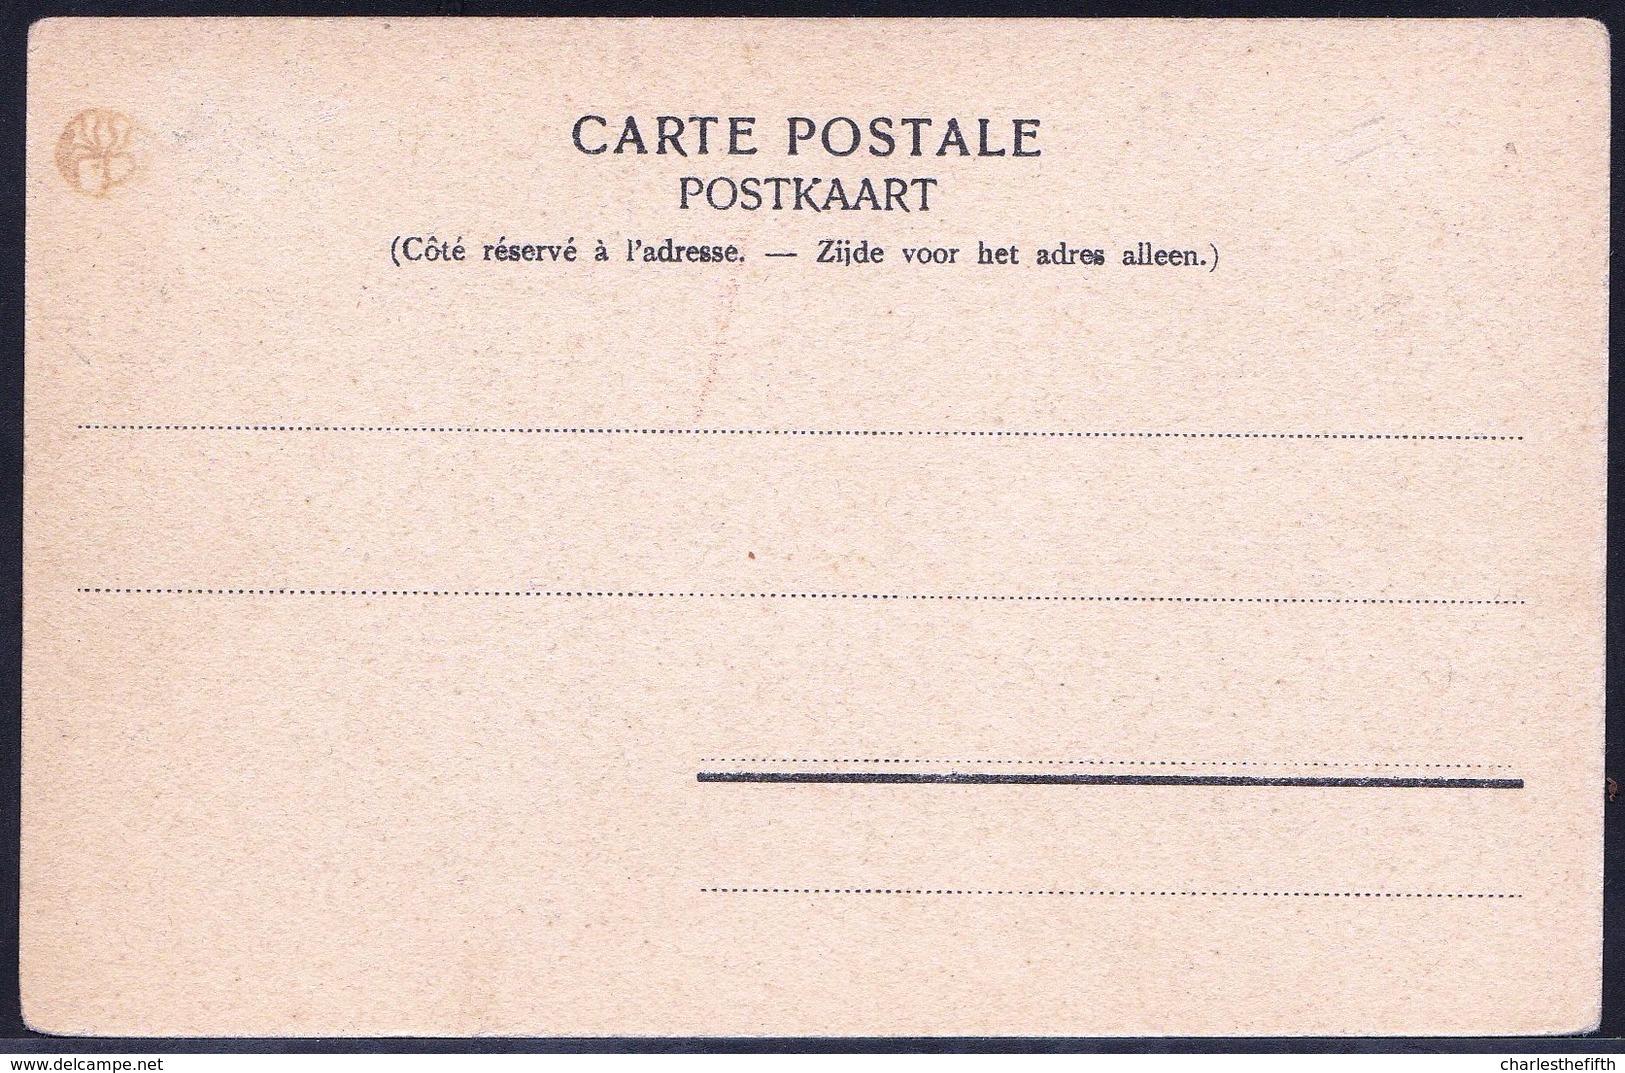 ST GENESIUS RODE - RHODE ST GENESE - Kasteel Septfontaines - Château Des Septfontaines - 1900 ! Précurseur Rare ! - St-Genesius-Rode